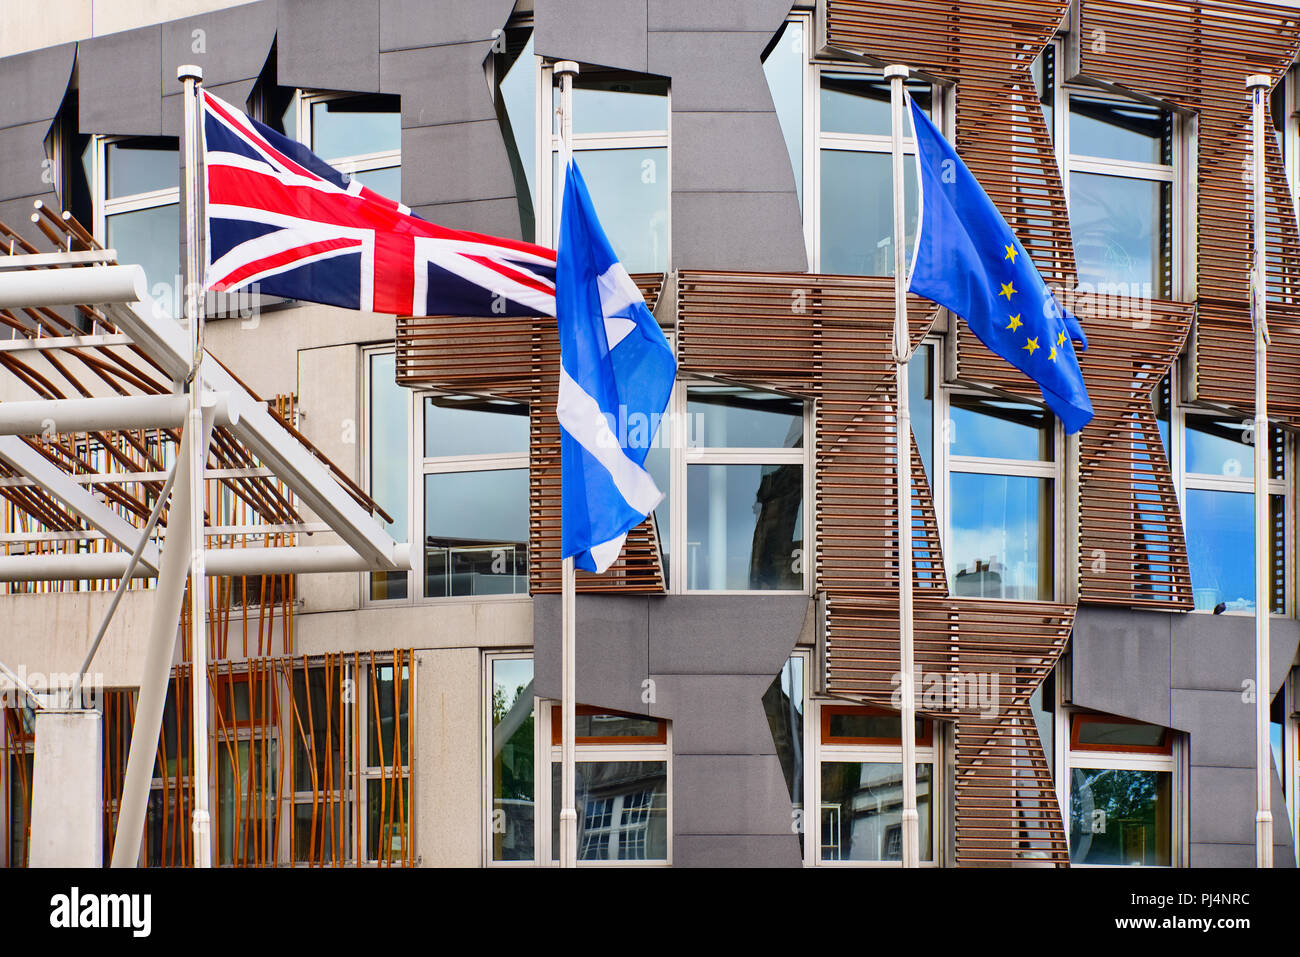 Scotland, Edinburgh, Scottish Parliament Building with Union Jack Scottish and EU flags outside. Stock Photo